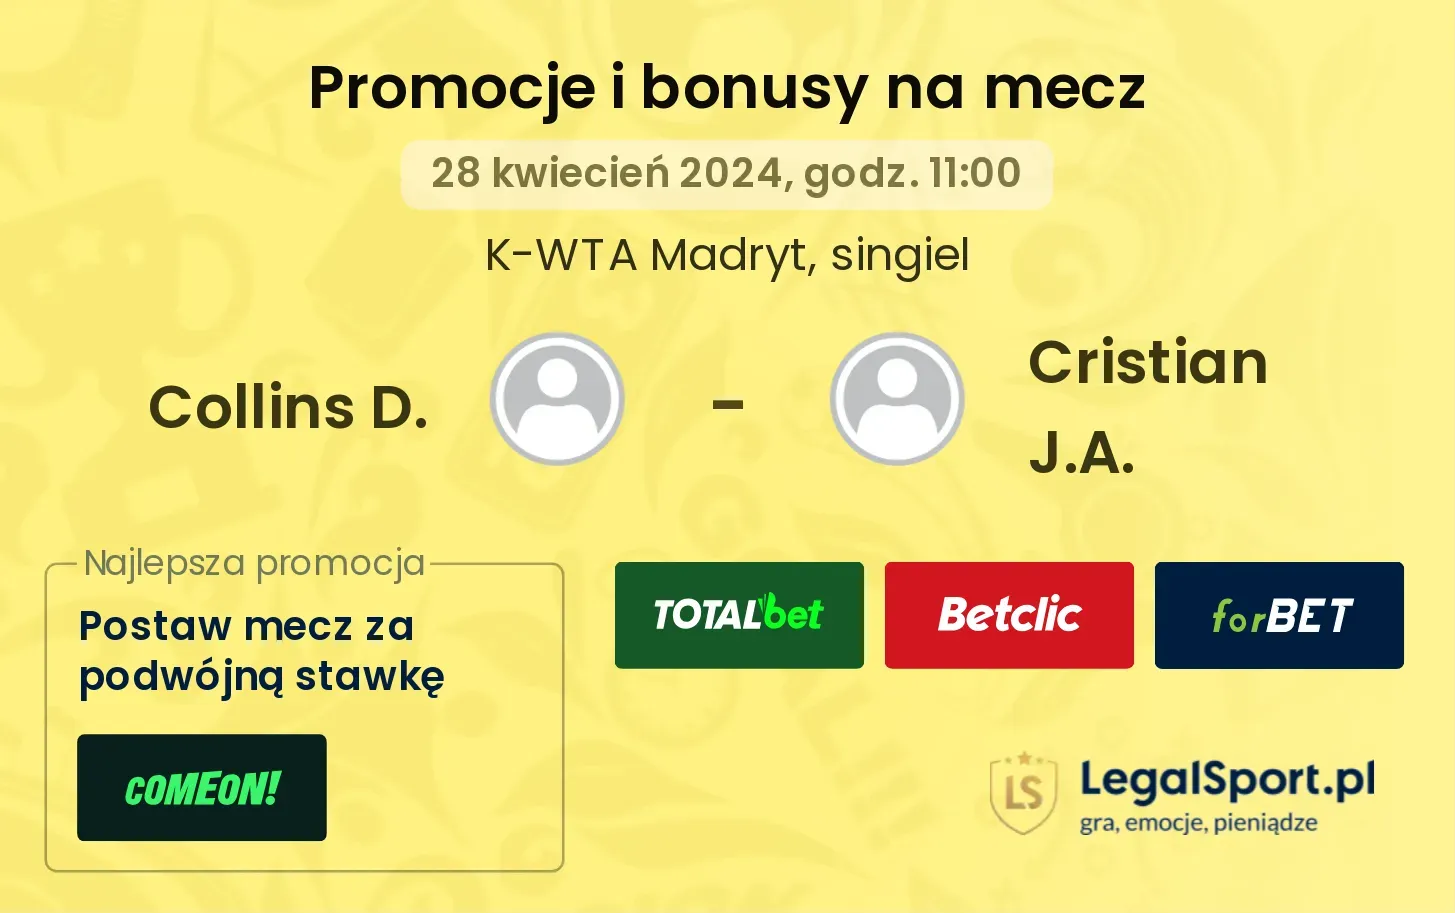 Collins D. - Cristian J.A. promocje bonusy na mecz